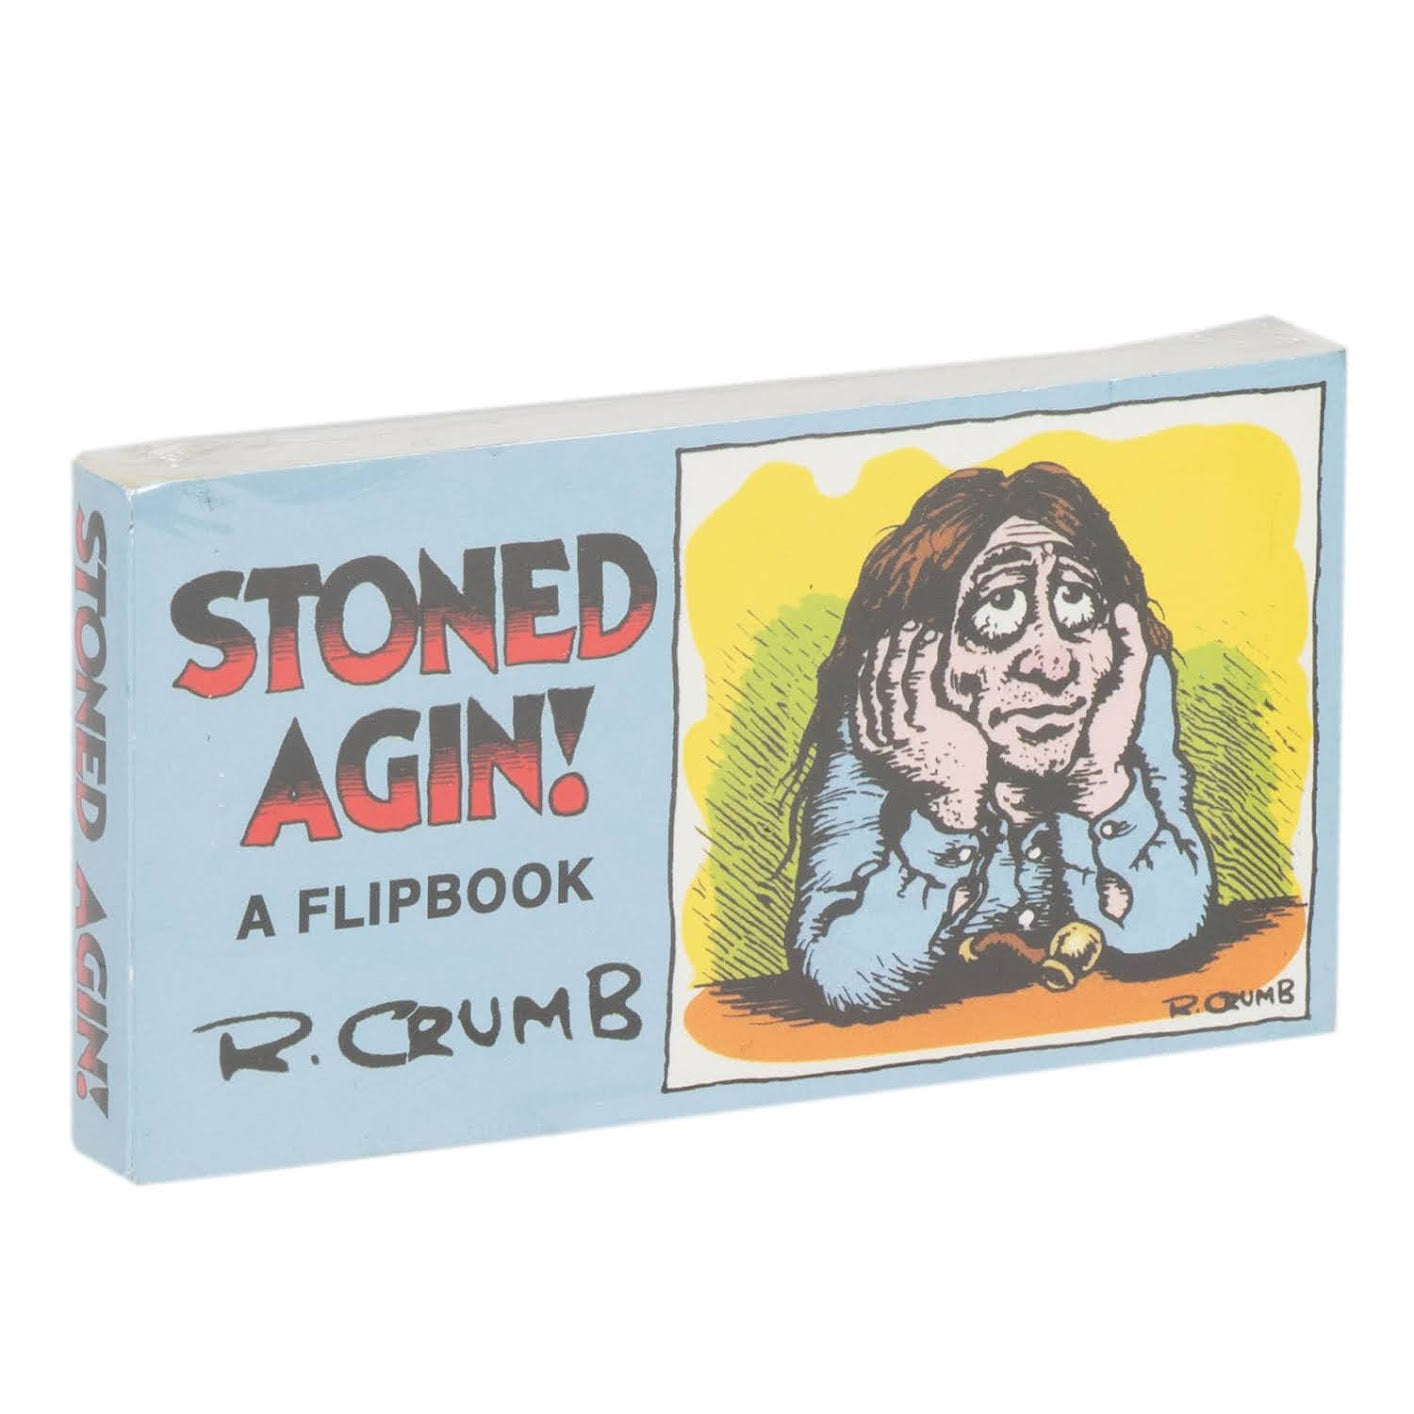 CIRCLES BOOKS Fliptomania R. Crumb Flipbook - Stoned Agin!